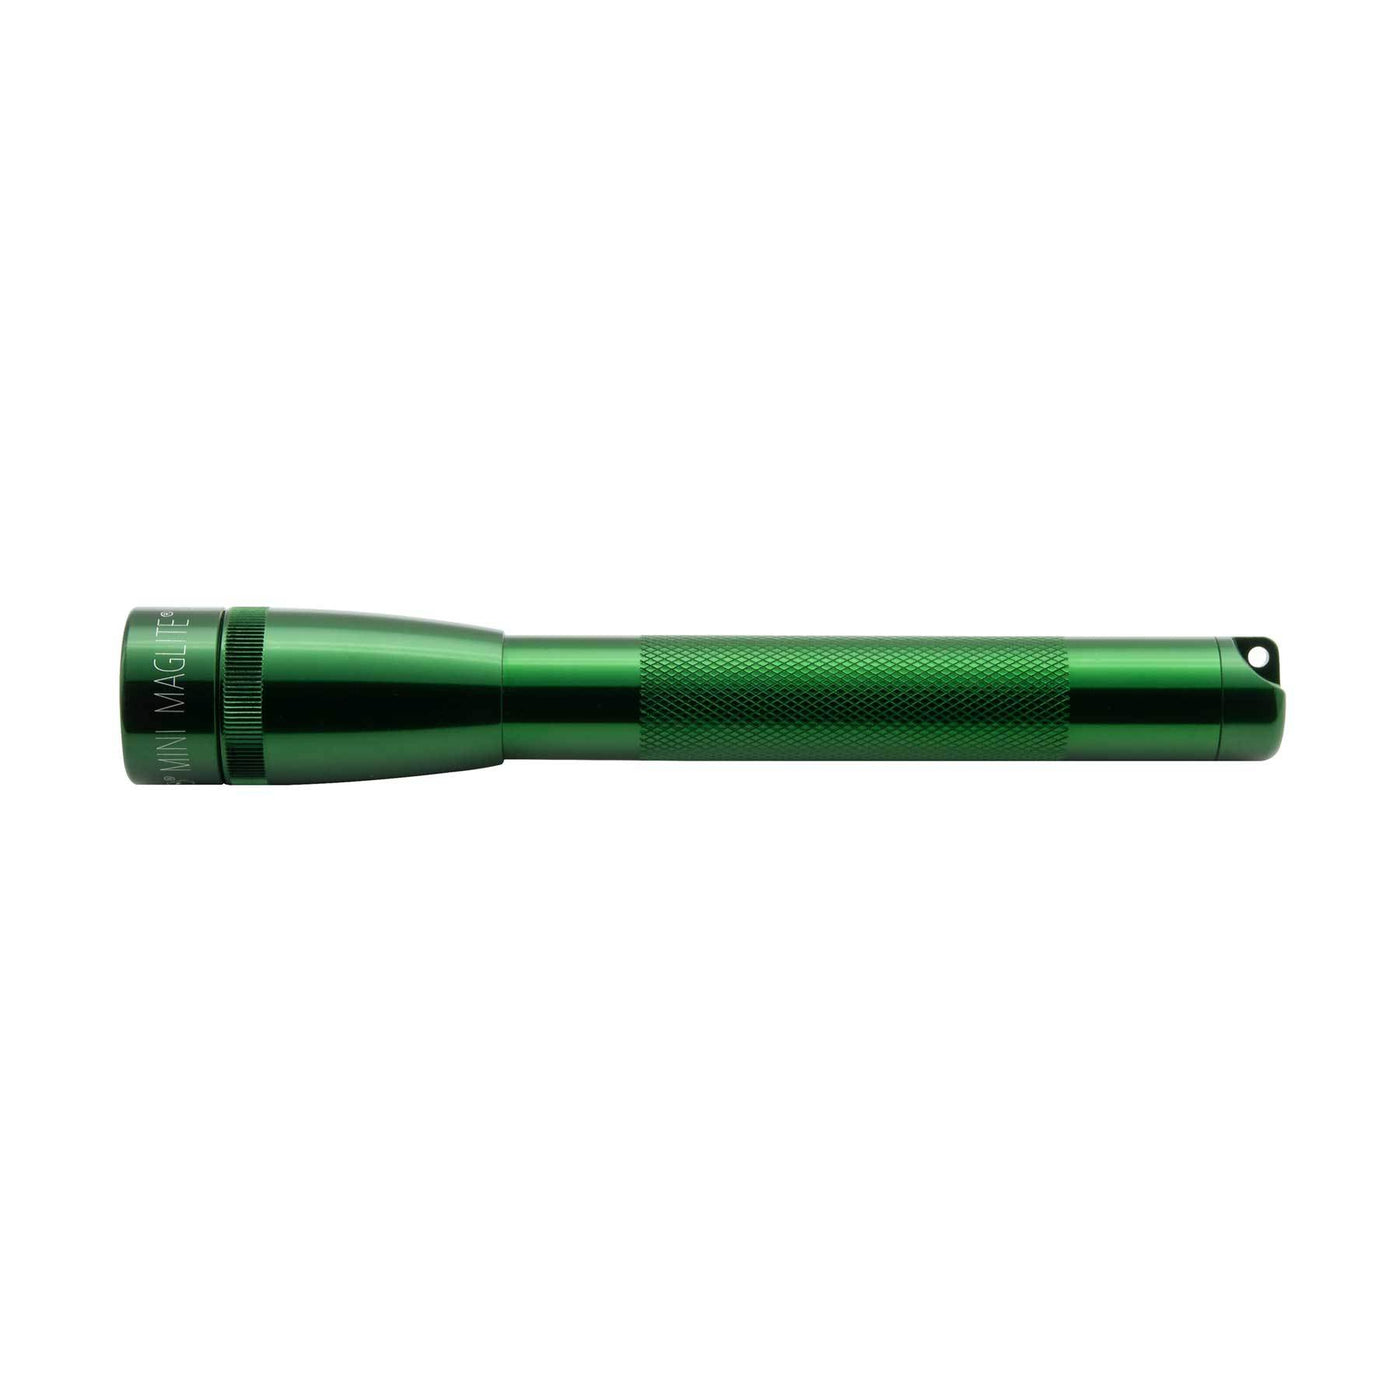 Mini Maglite Pro Plus LED 2AA Holster Pack - Dark Green